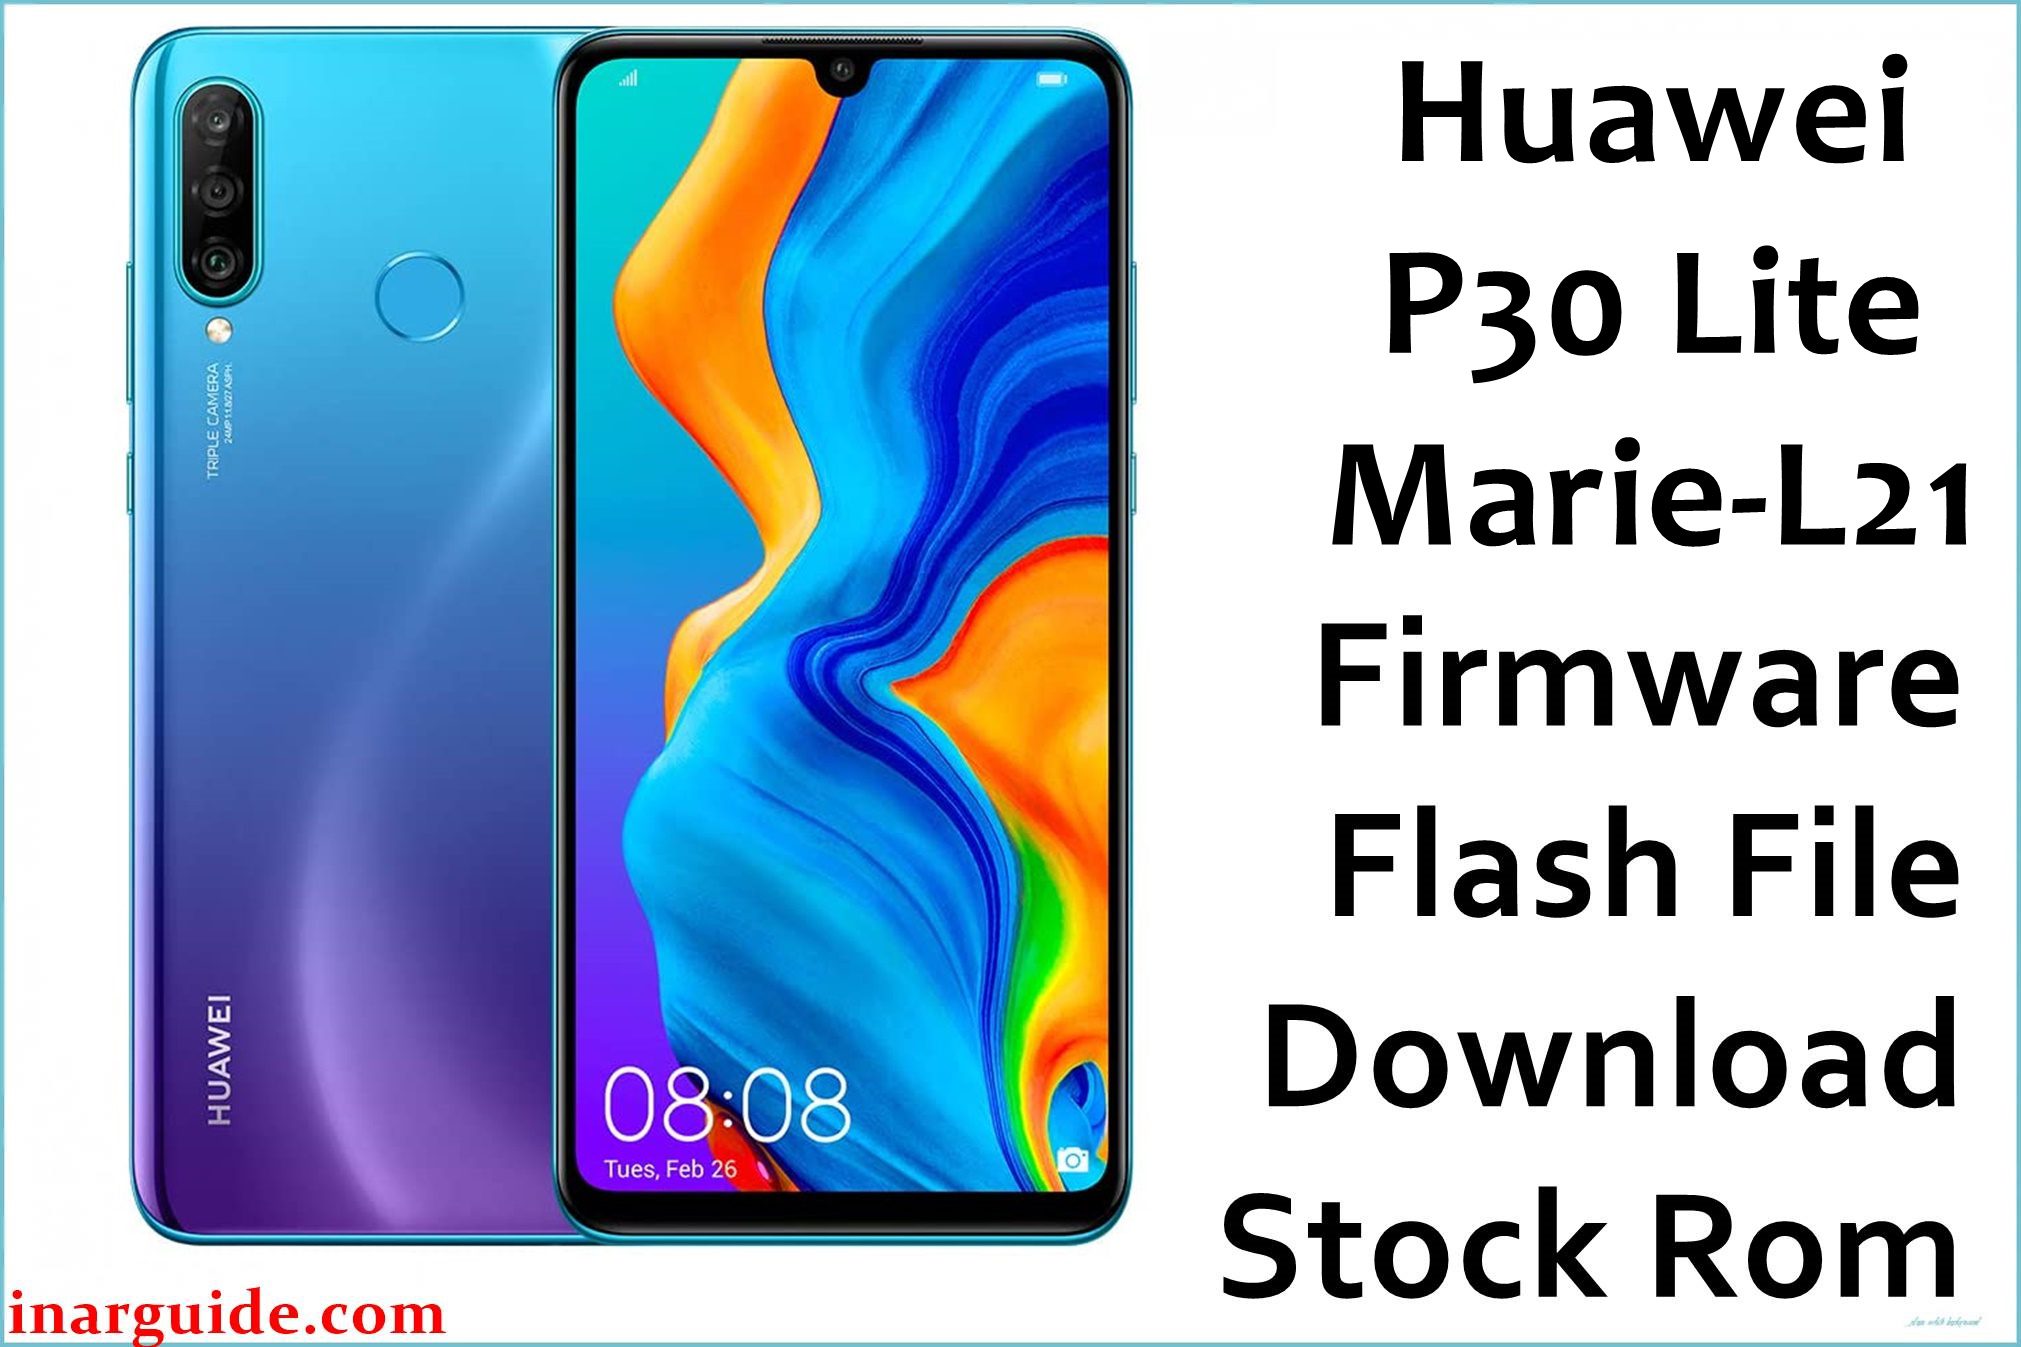 Huawei P30 Lite Marie L21